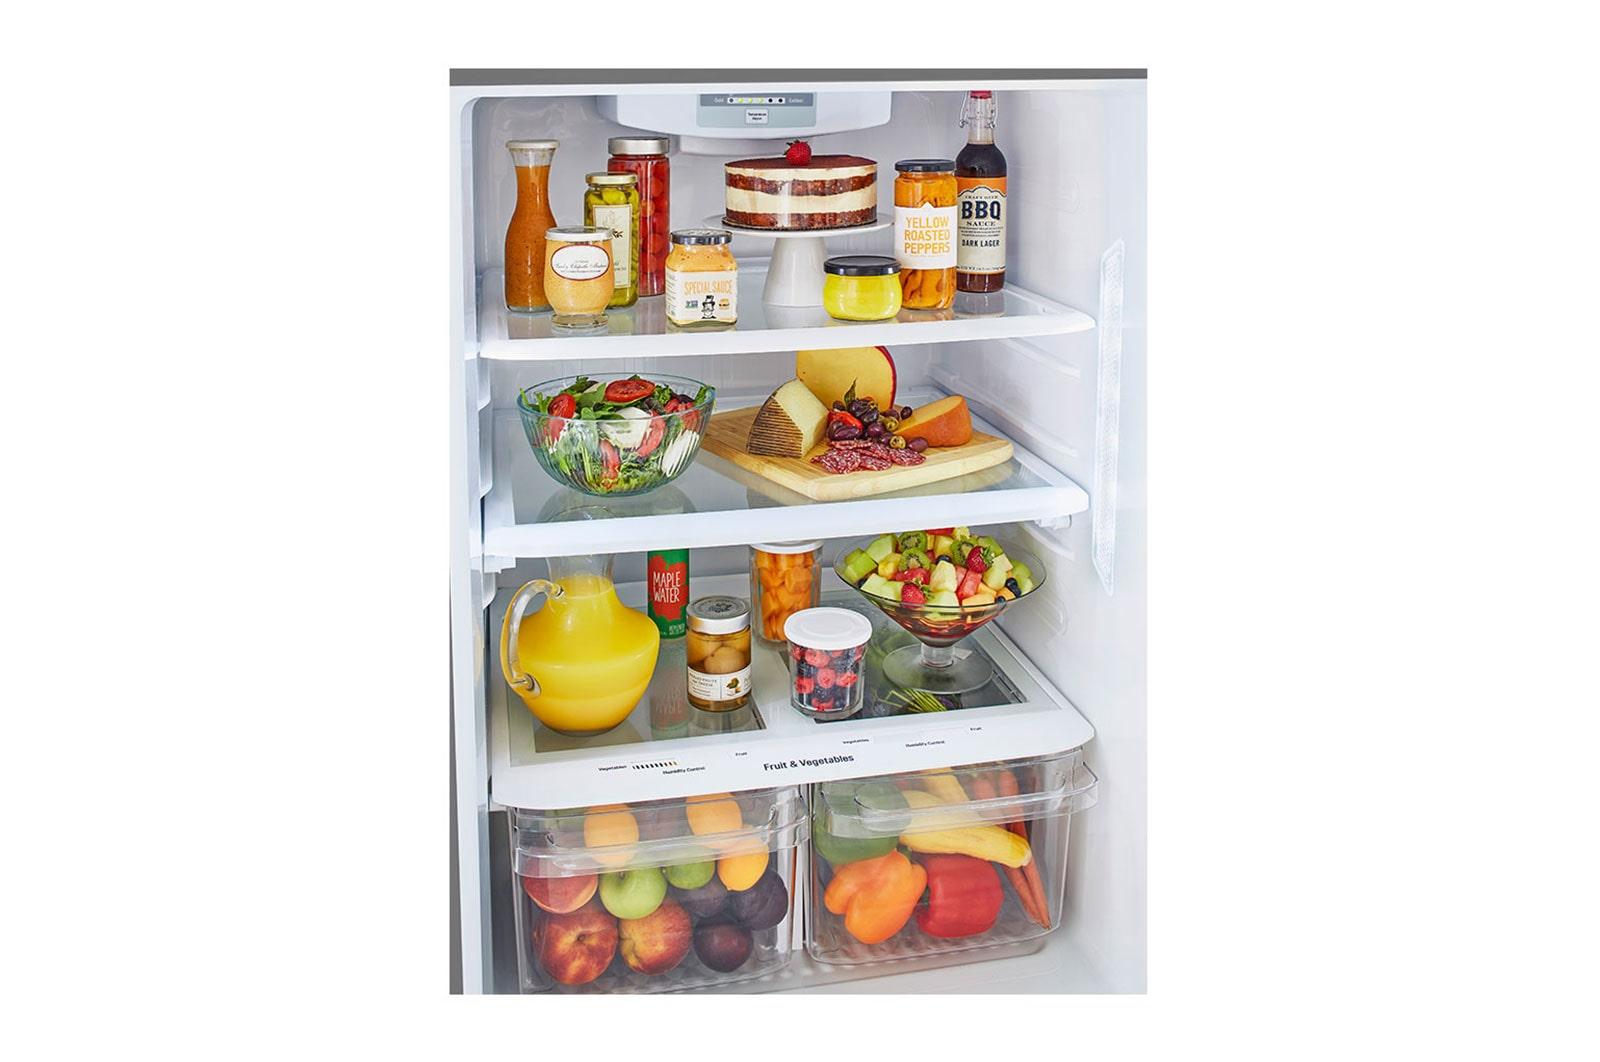 Lg 20 cu. ft. Top Freezer Refrigerator